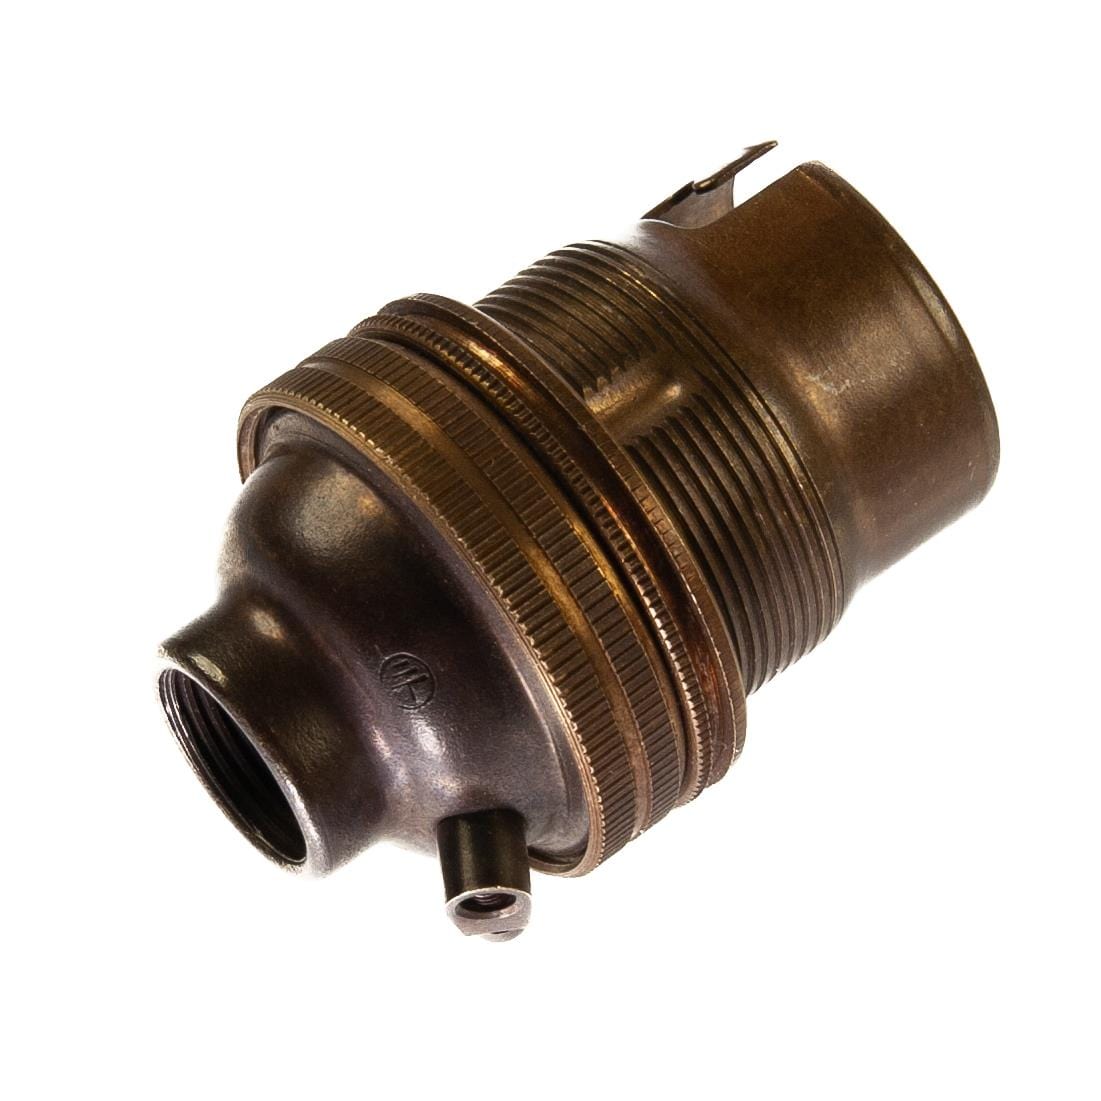 Old English Brass Lamp Holder Bayonet Cap (BC) (B22d) Fitting Bulb Holder 1/2" Screw Thread Plain Lampholders Thunderfix 901582